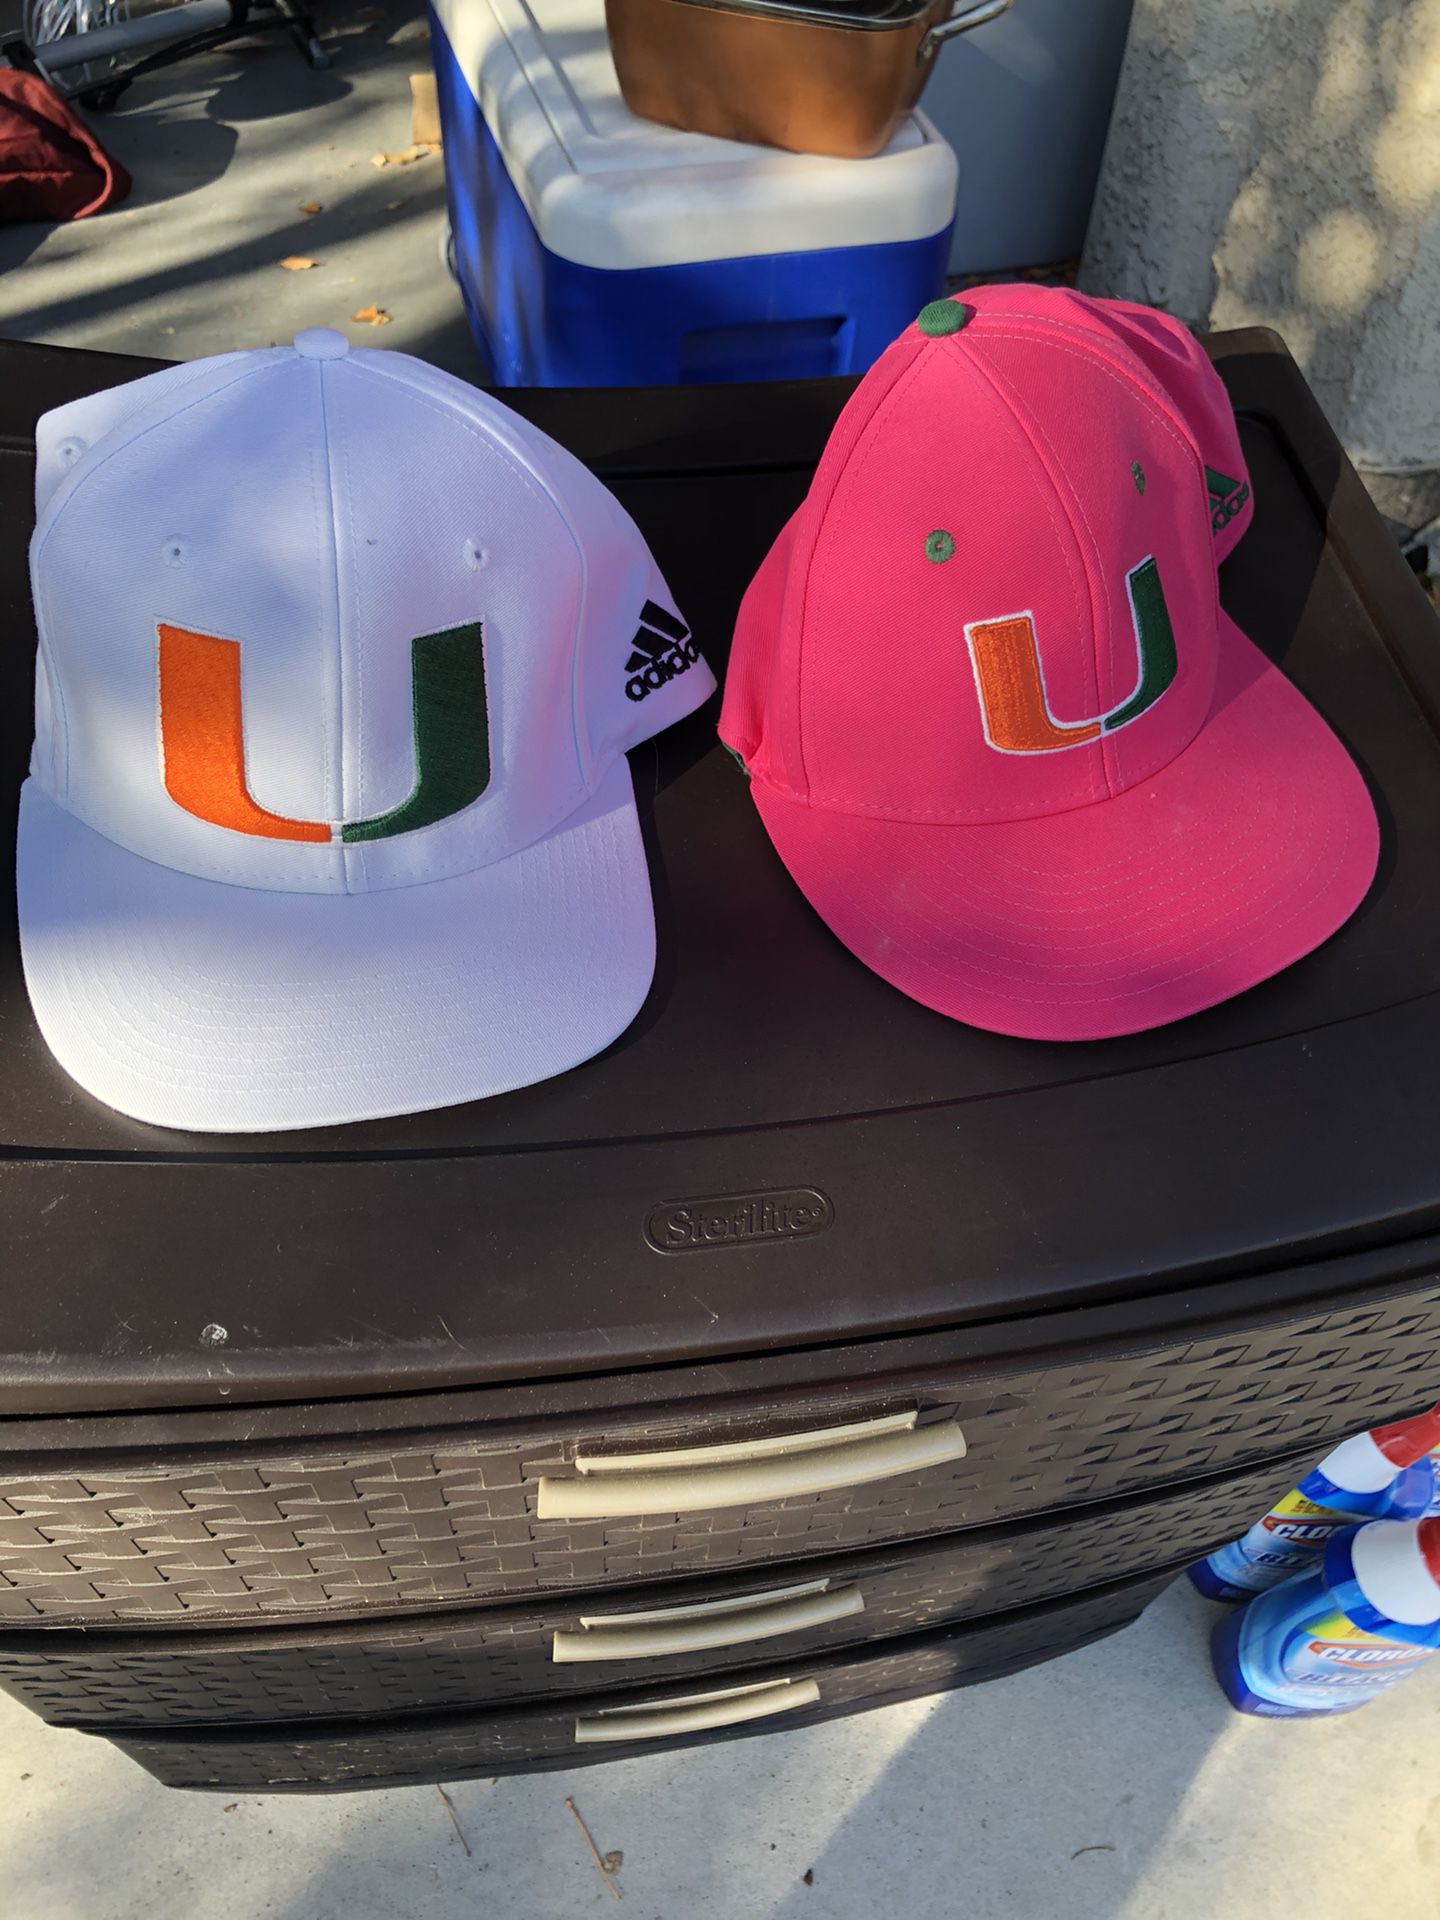 University of Miami hats (Adidas)